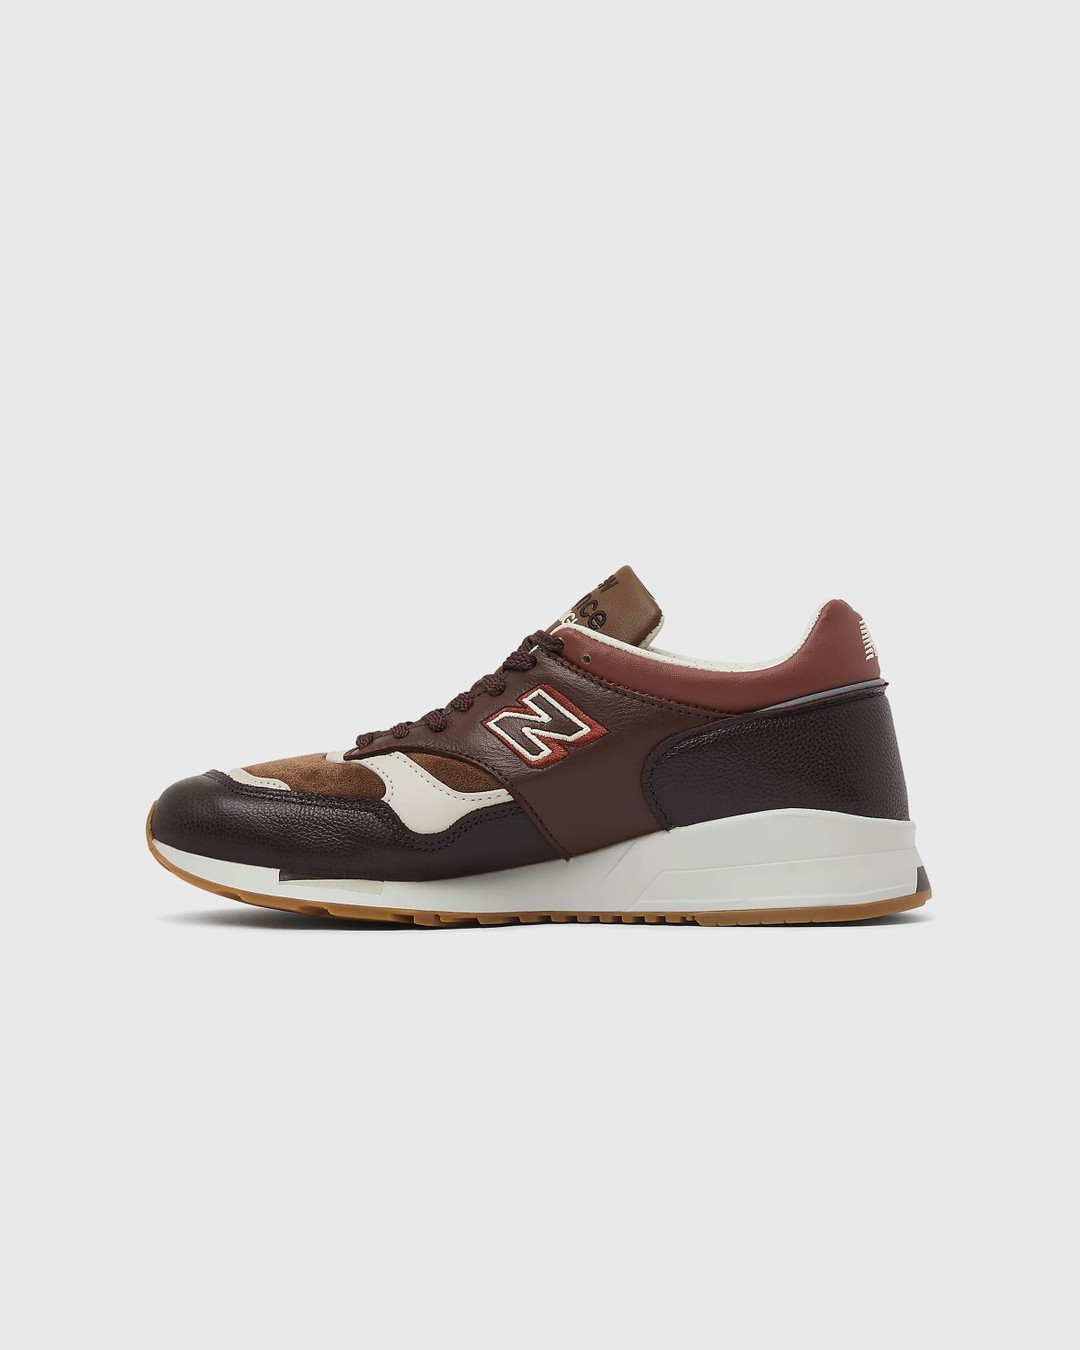 New Balance – M1500GBI Brown - Low Top Sneakers - Brown - Image 2